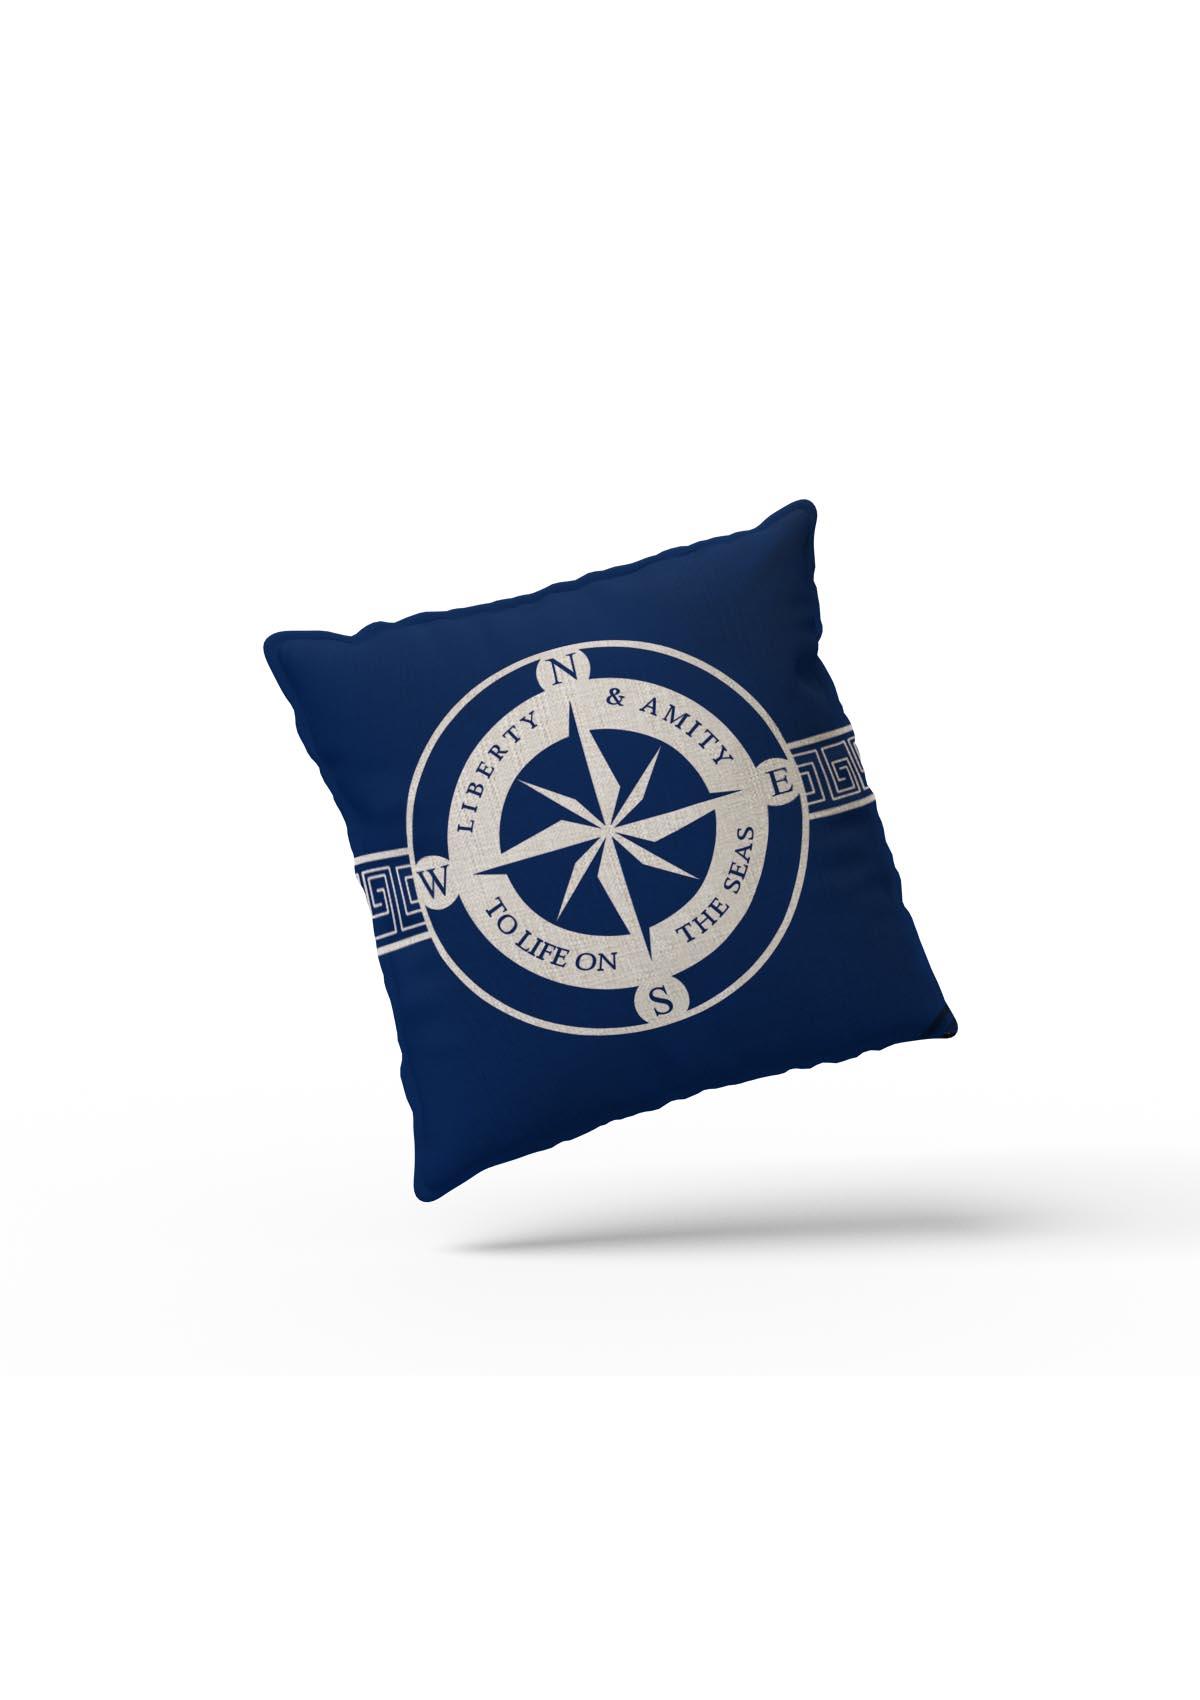 nautical cushion covers